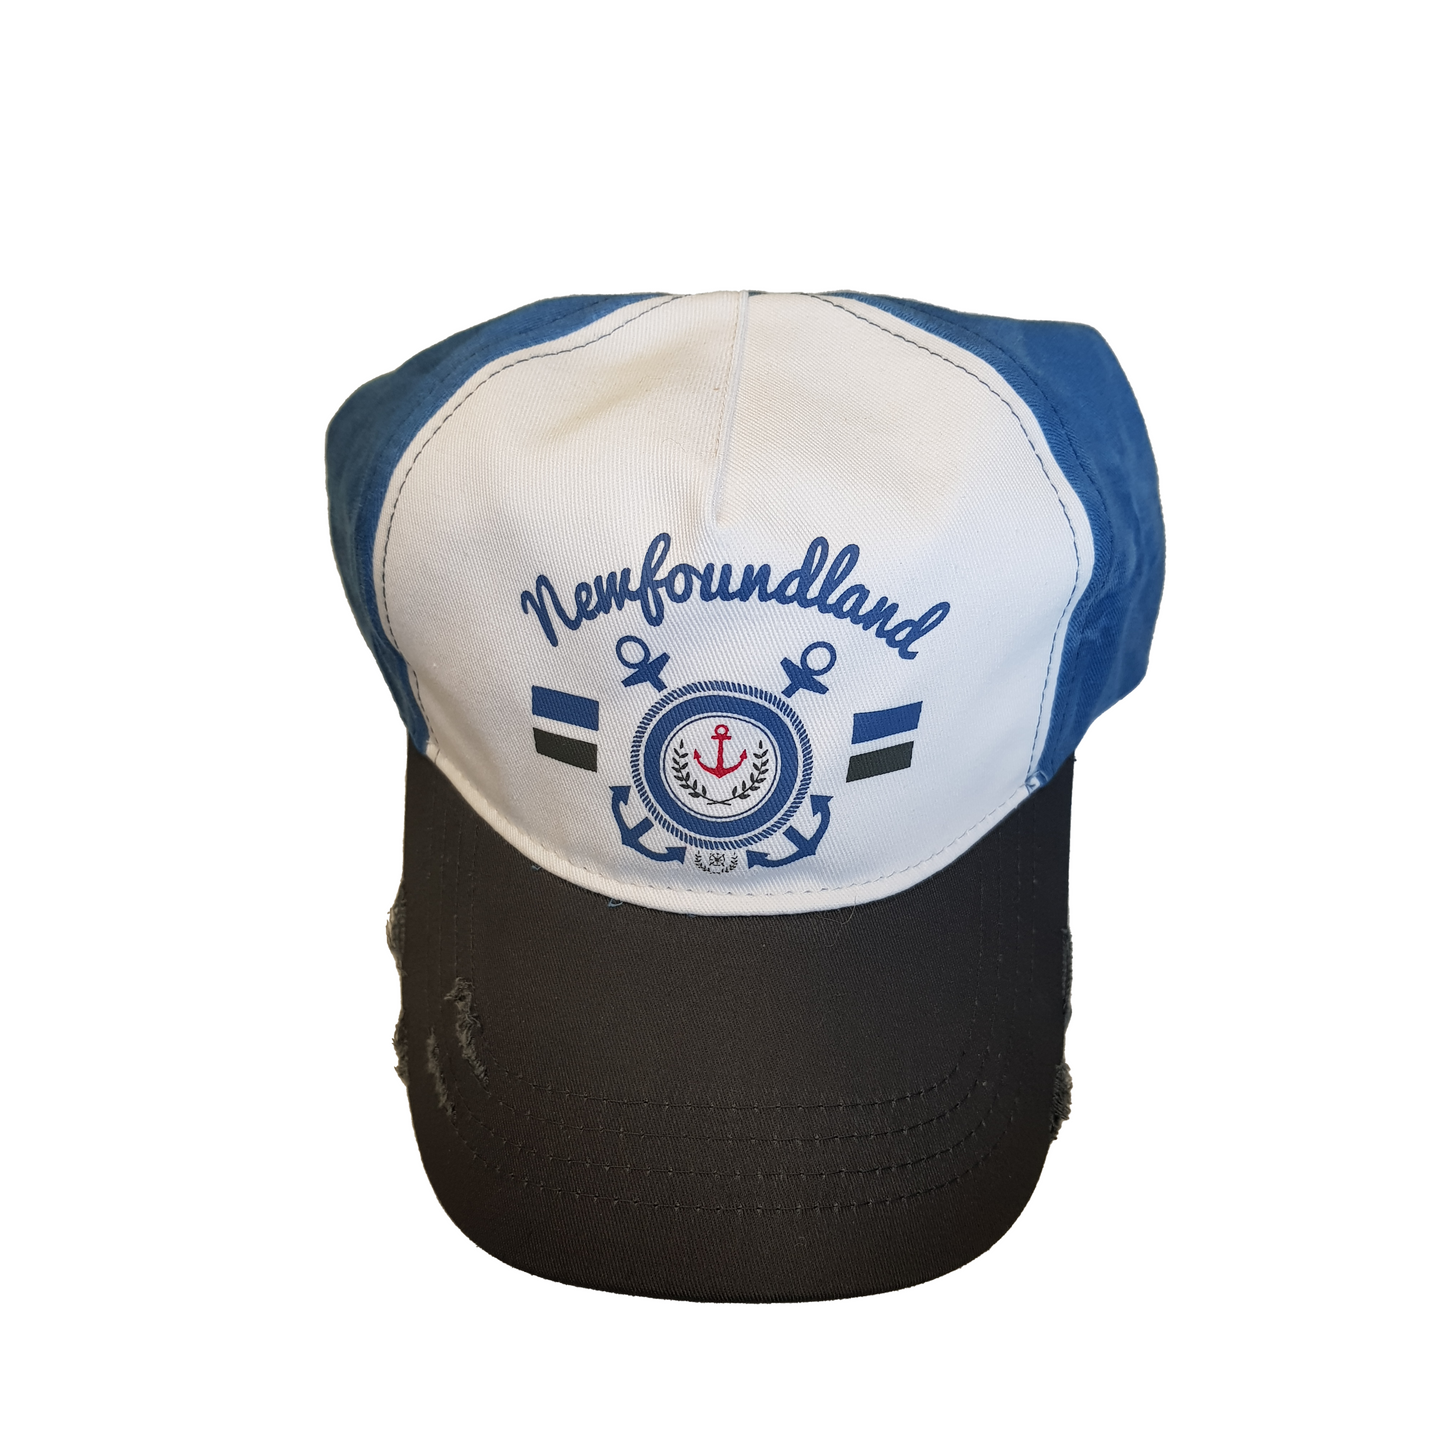 Newfoundland Souvenir Hats - Assorted Designs